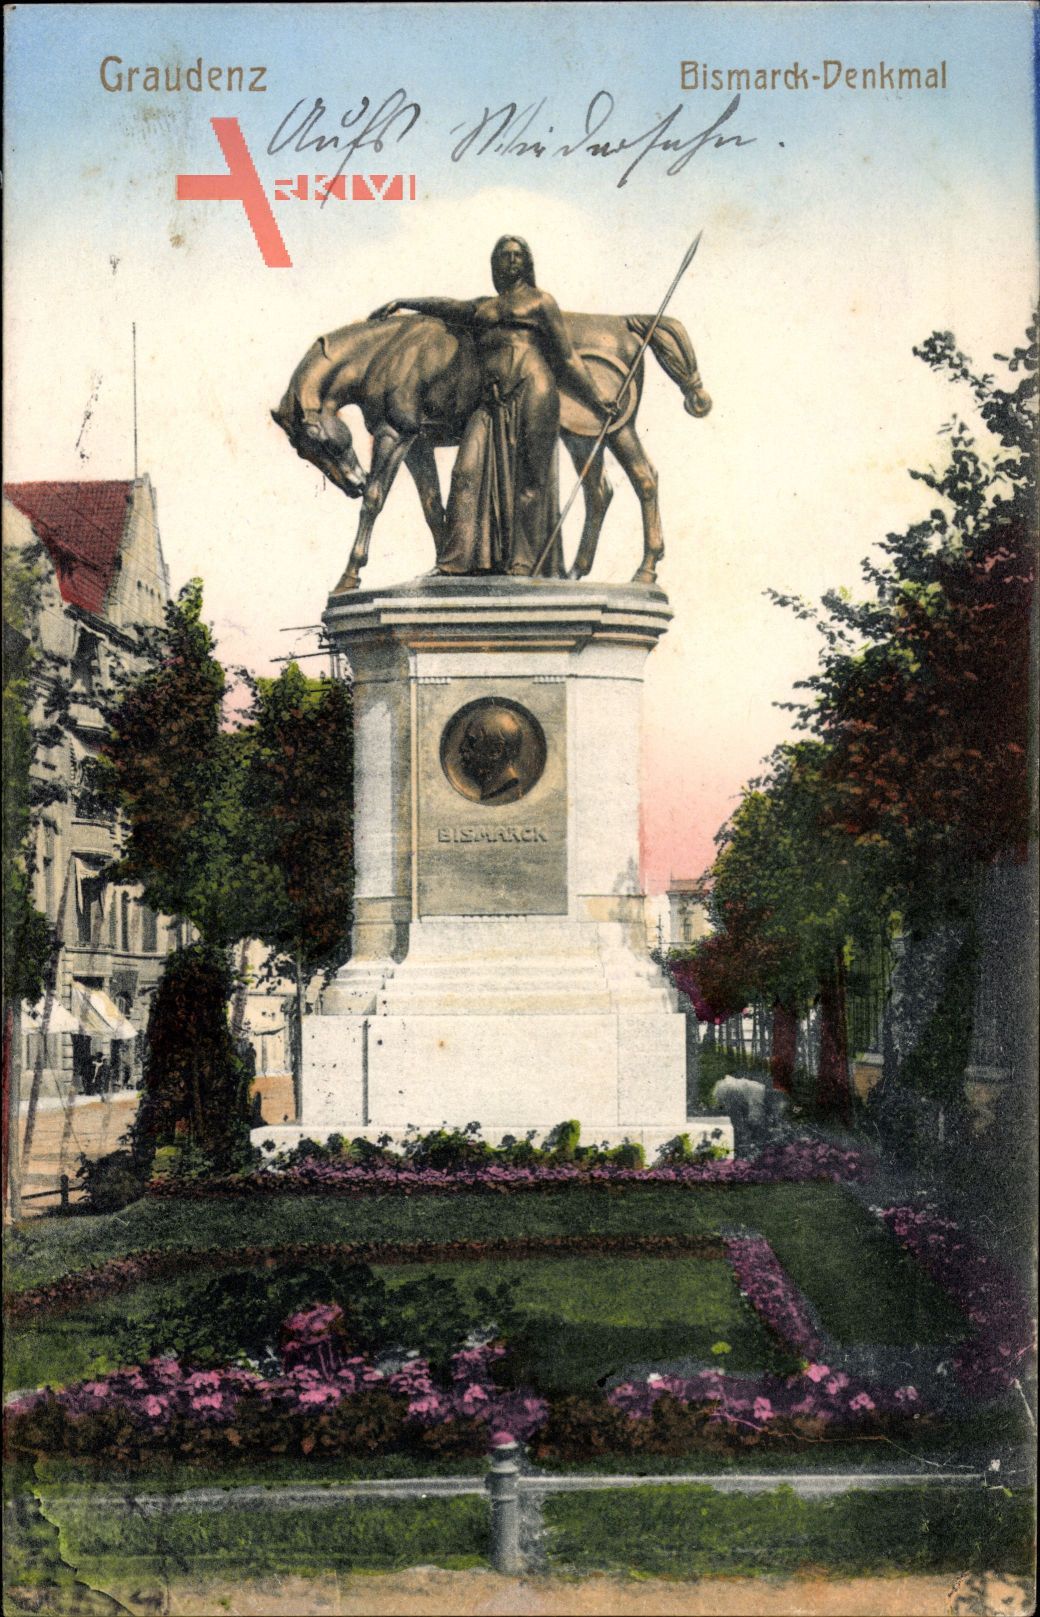 Grudziądz Graudenz Westpreußen, Bismarckdenkmal